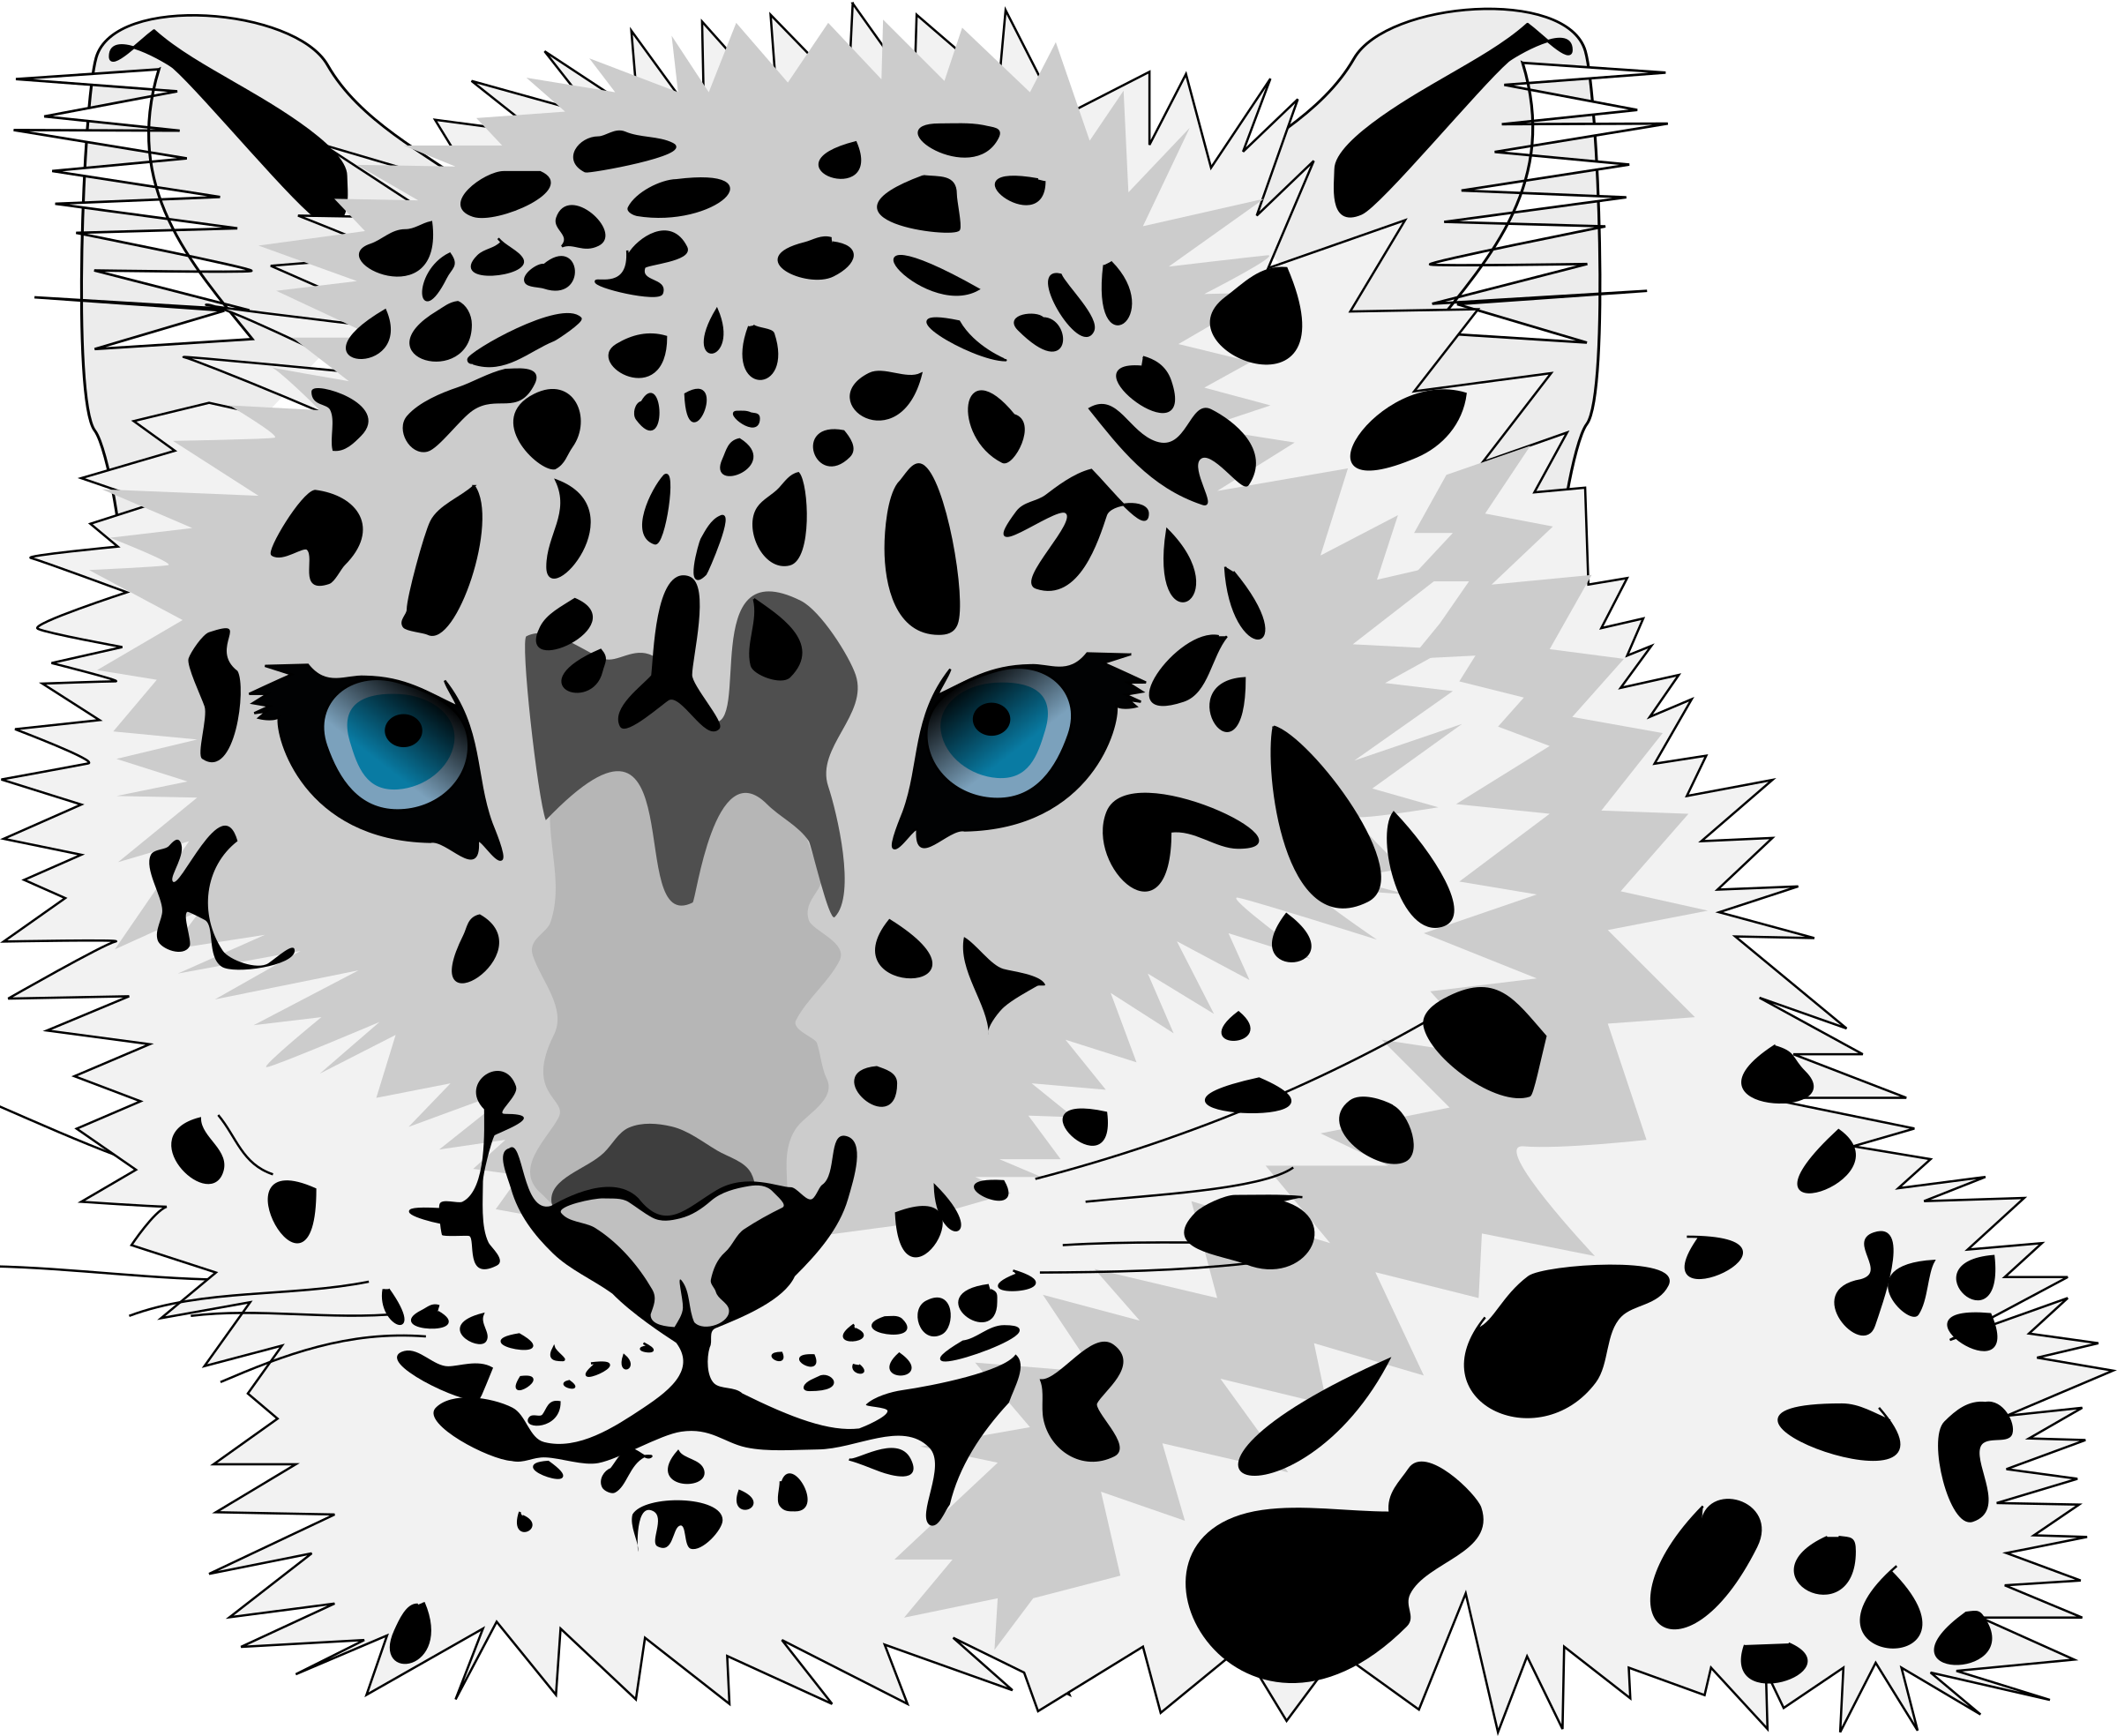 Snow Leopard Vector Graphic image - Free stock photo - Public Domain